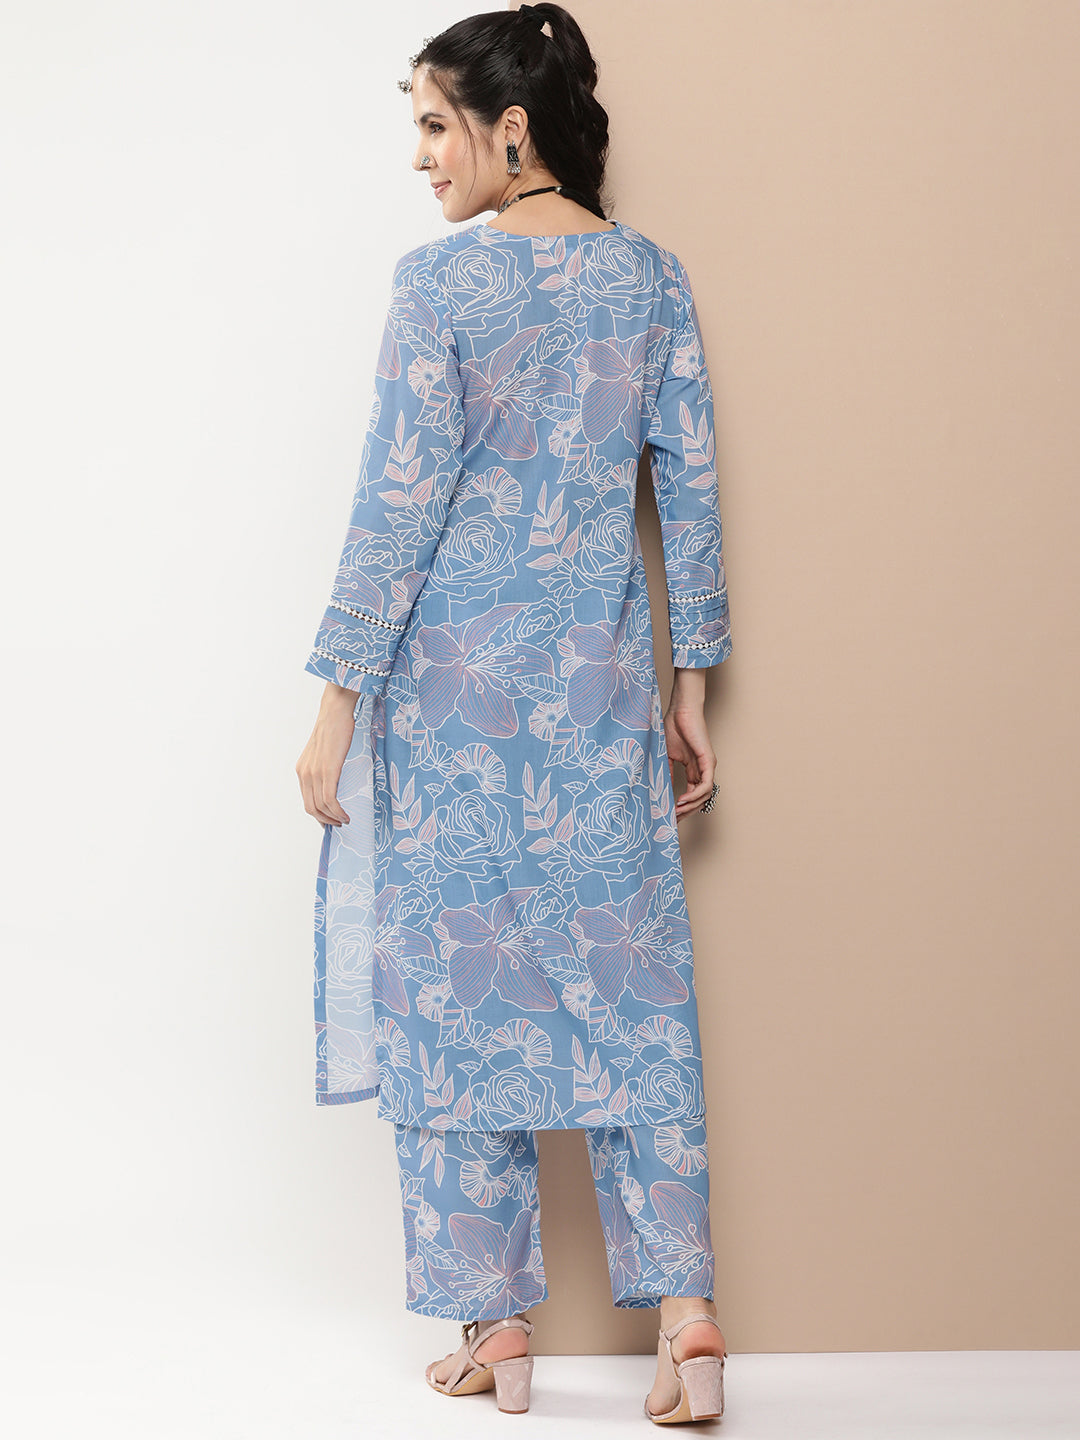 Women's Blue Floral Print Kurta With Lace Details With Blue Floral Print Palazzos - Bhama Couture